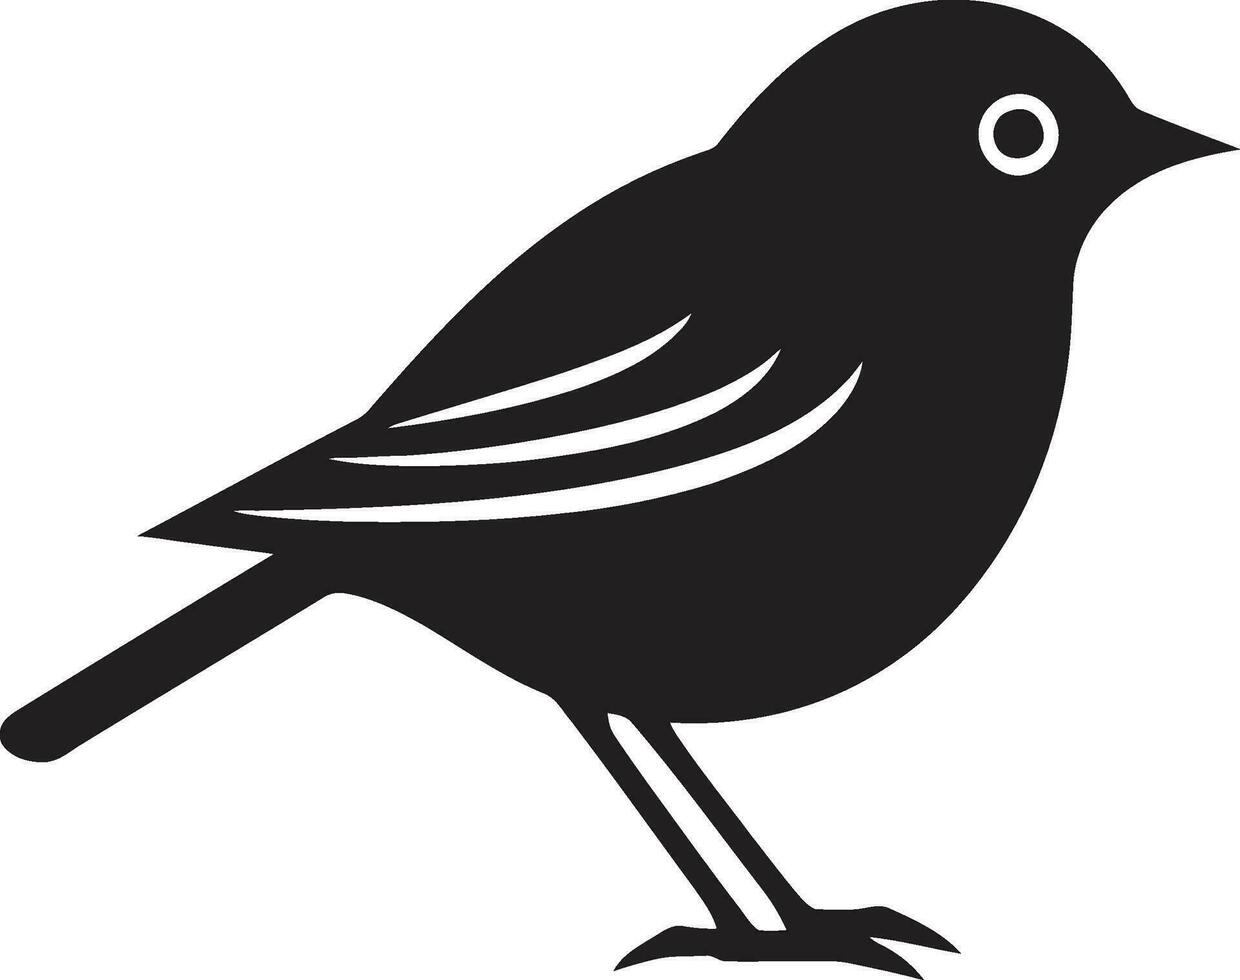 Sparrow Serenity Emblem Falcon in Stealth vector